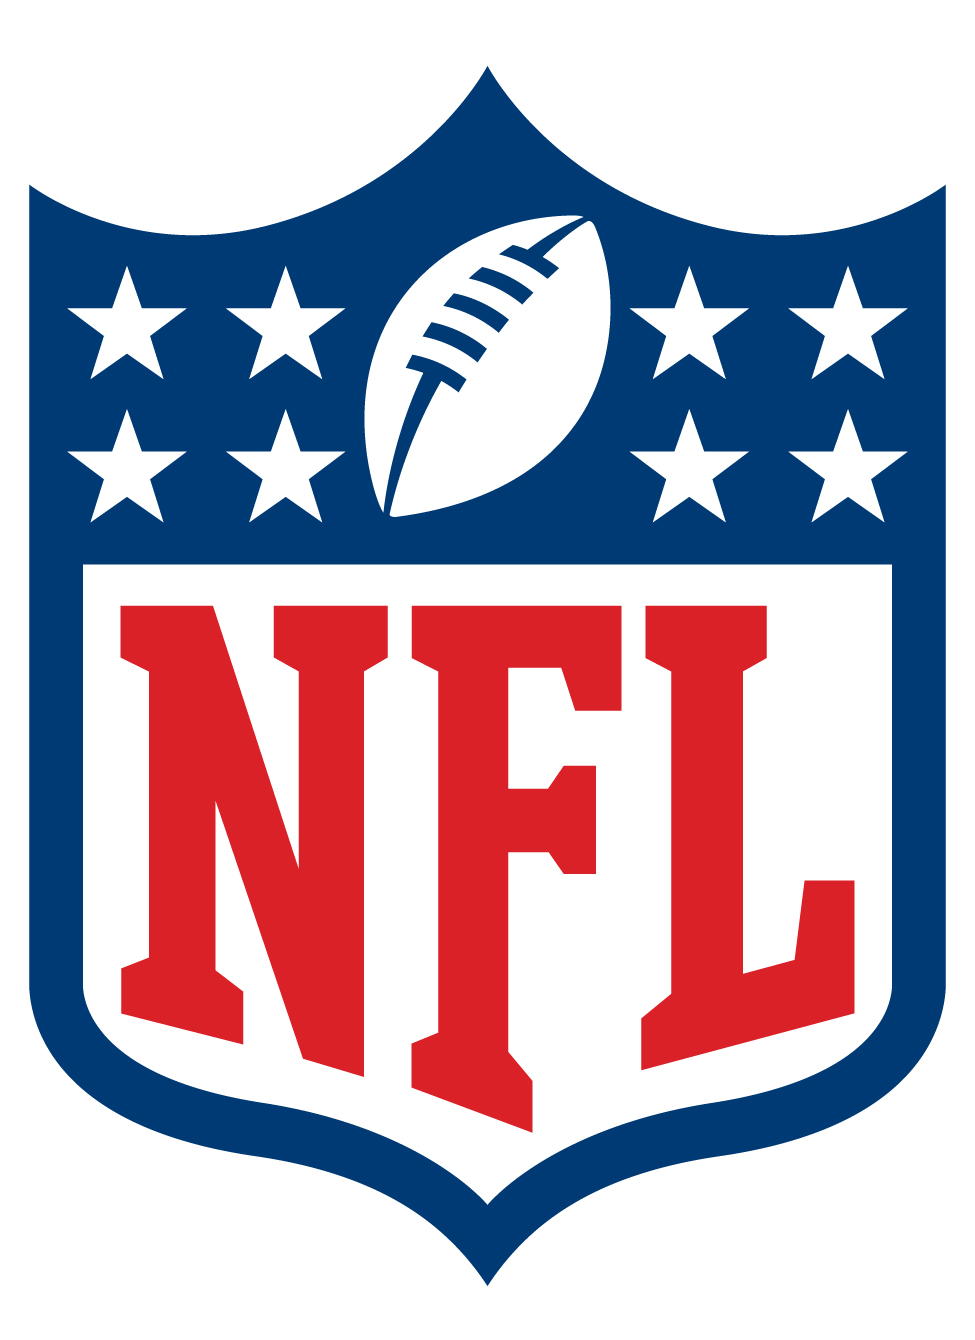 NFL Shield Mark | NFL Footbal Wallpaper in HD Resolutions